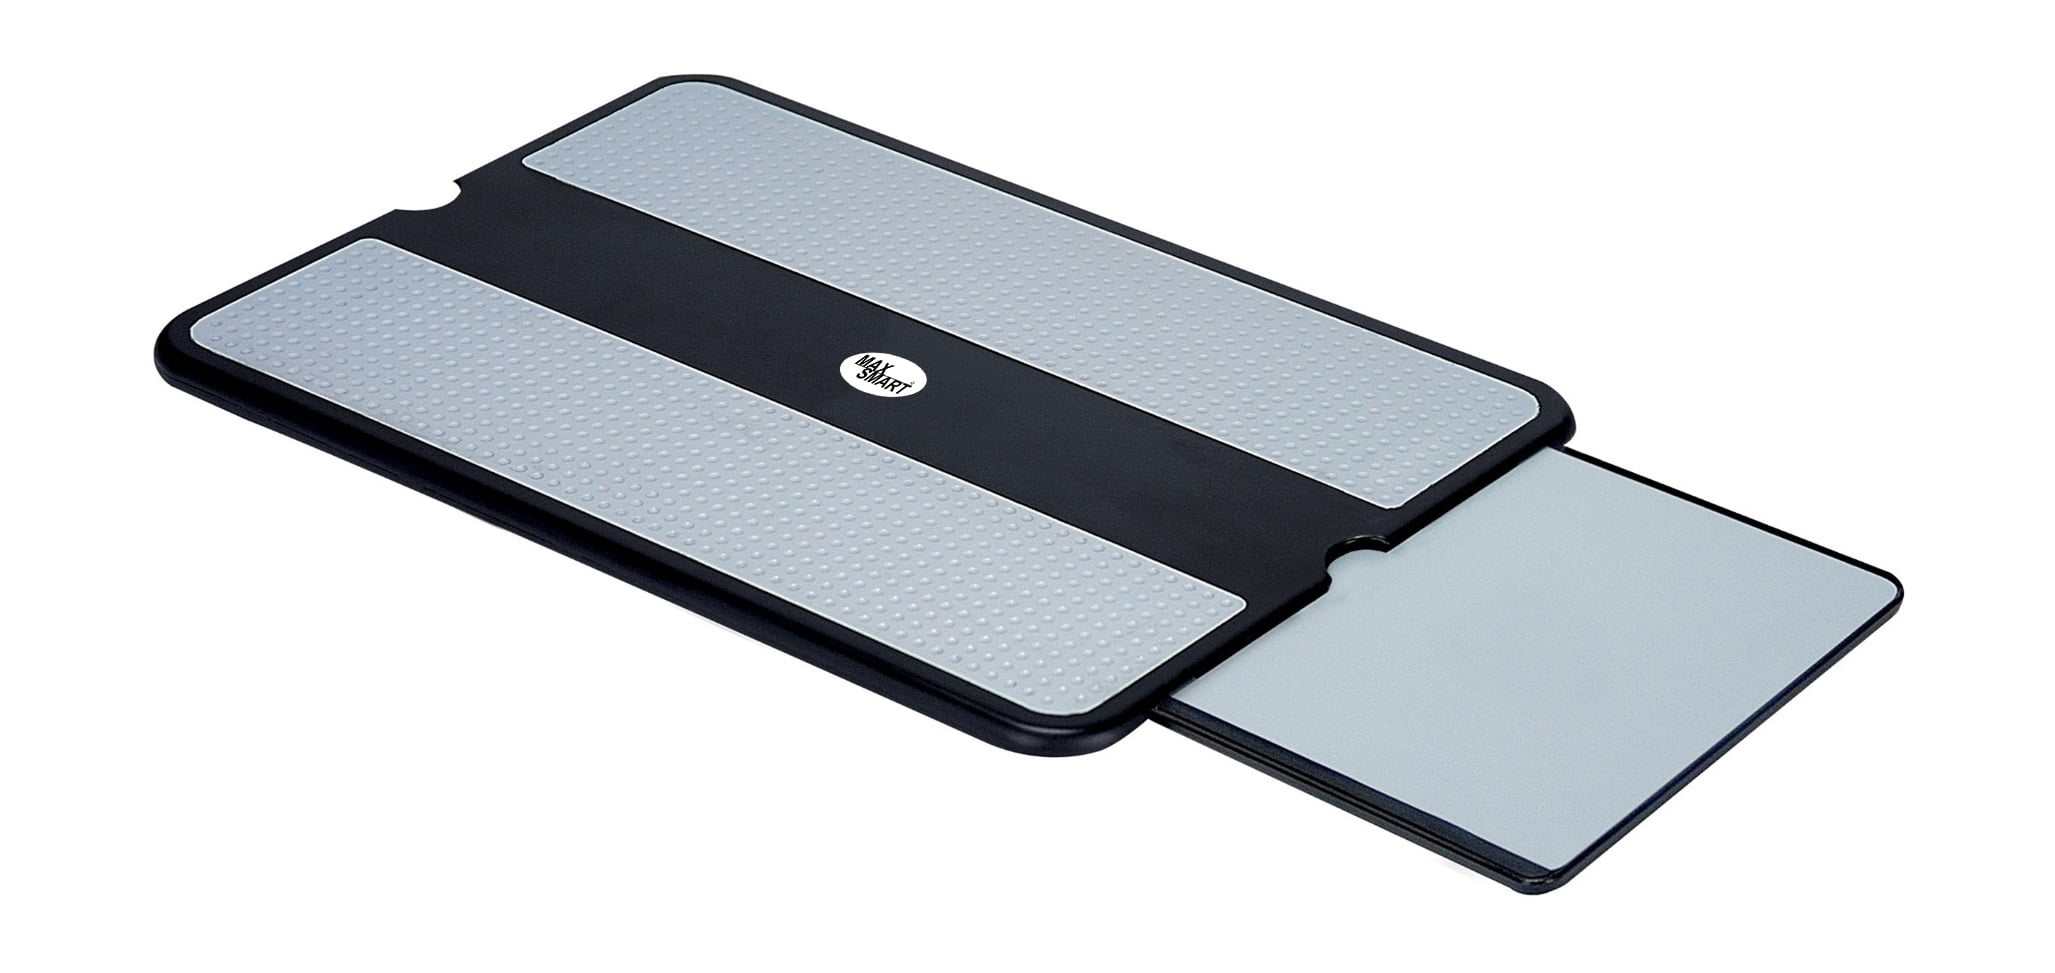 MAX SMART Portable Laptop Lap Desk w Retractable Mouse Pad Tray and  Anti-slip Heat Shield 